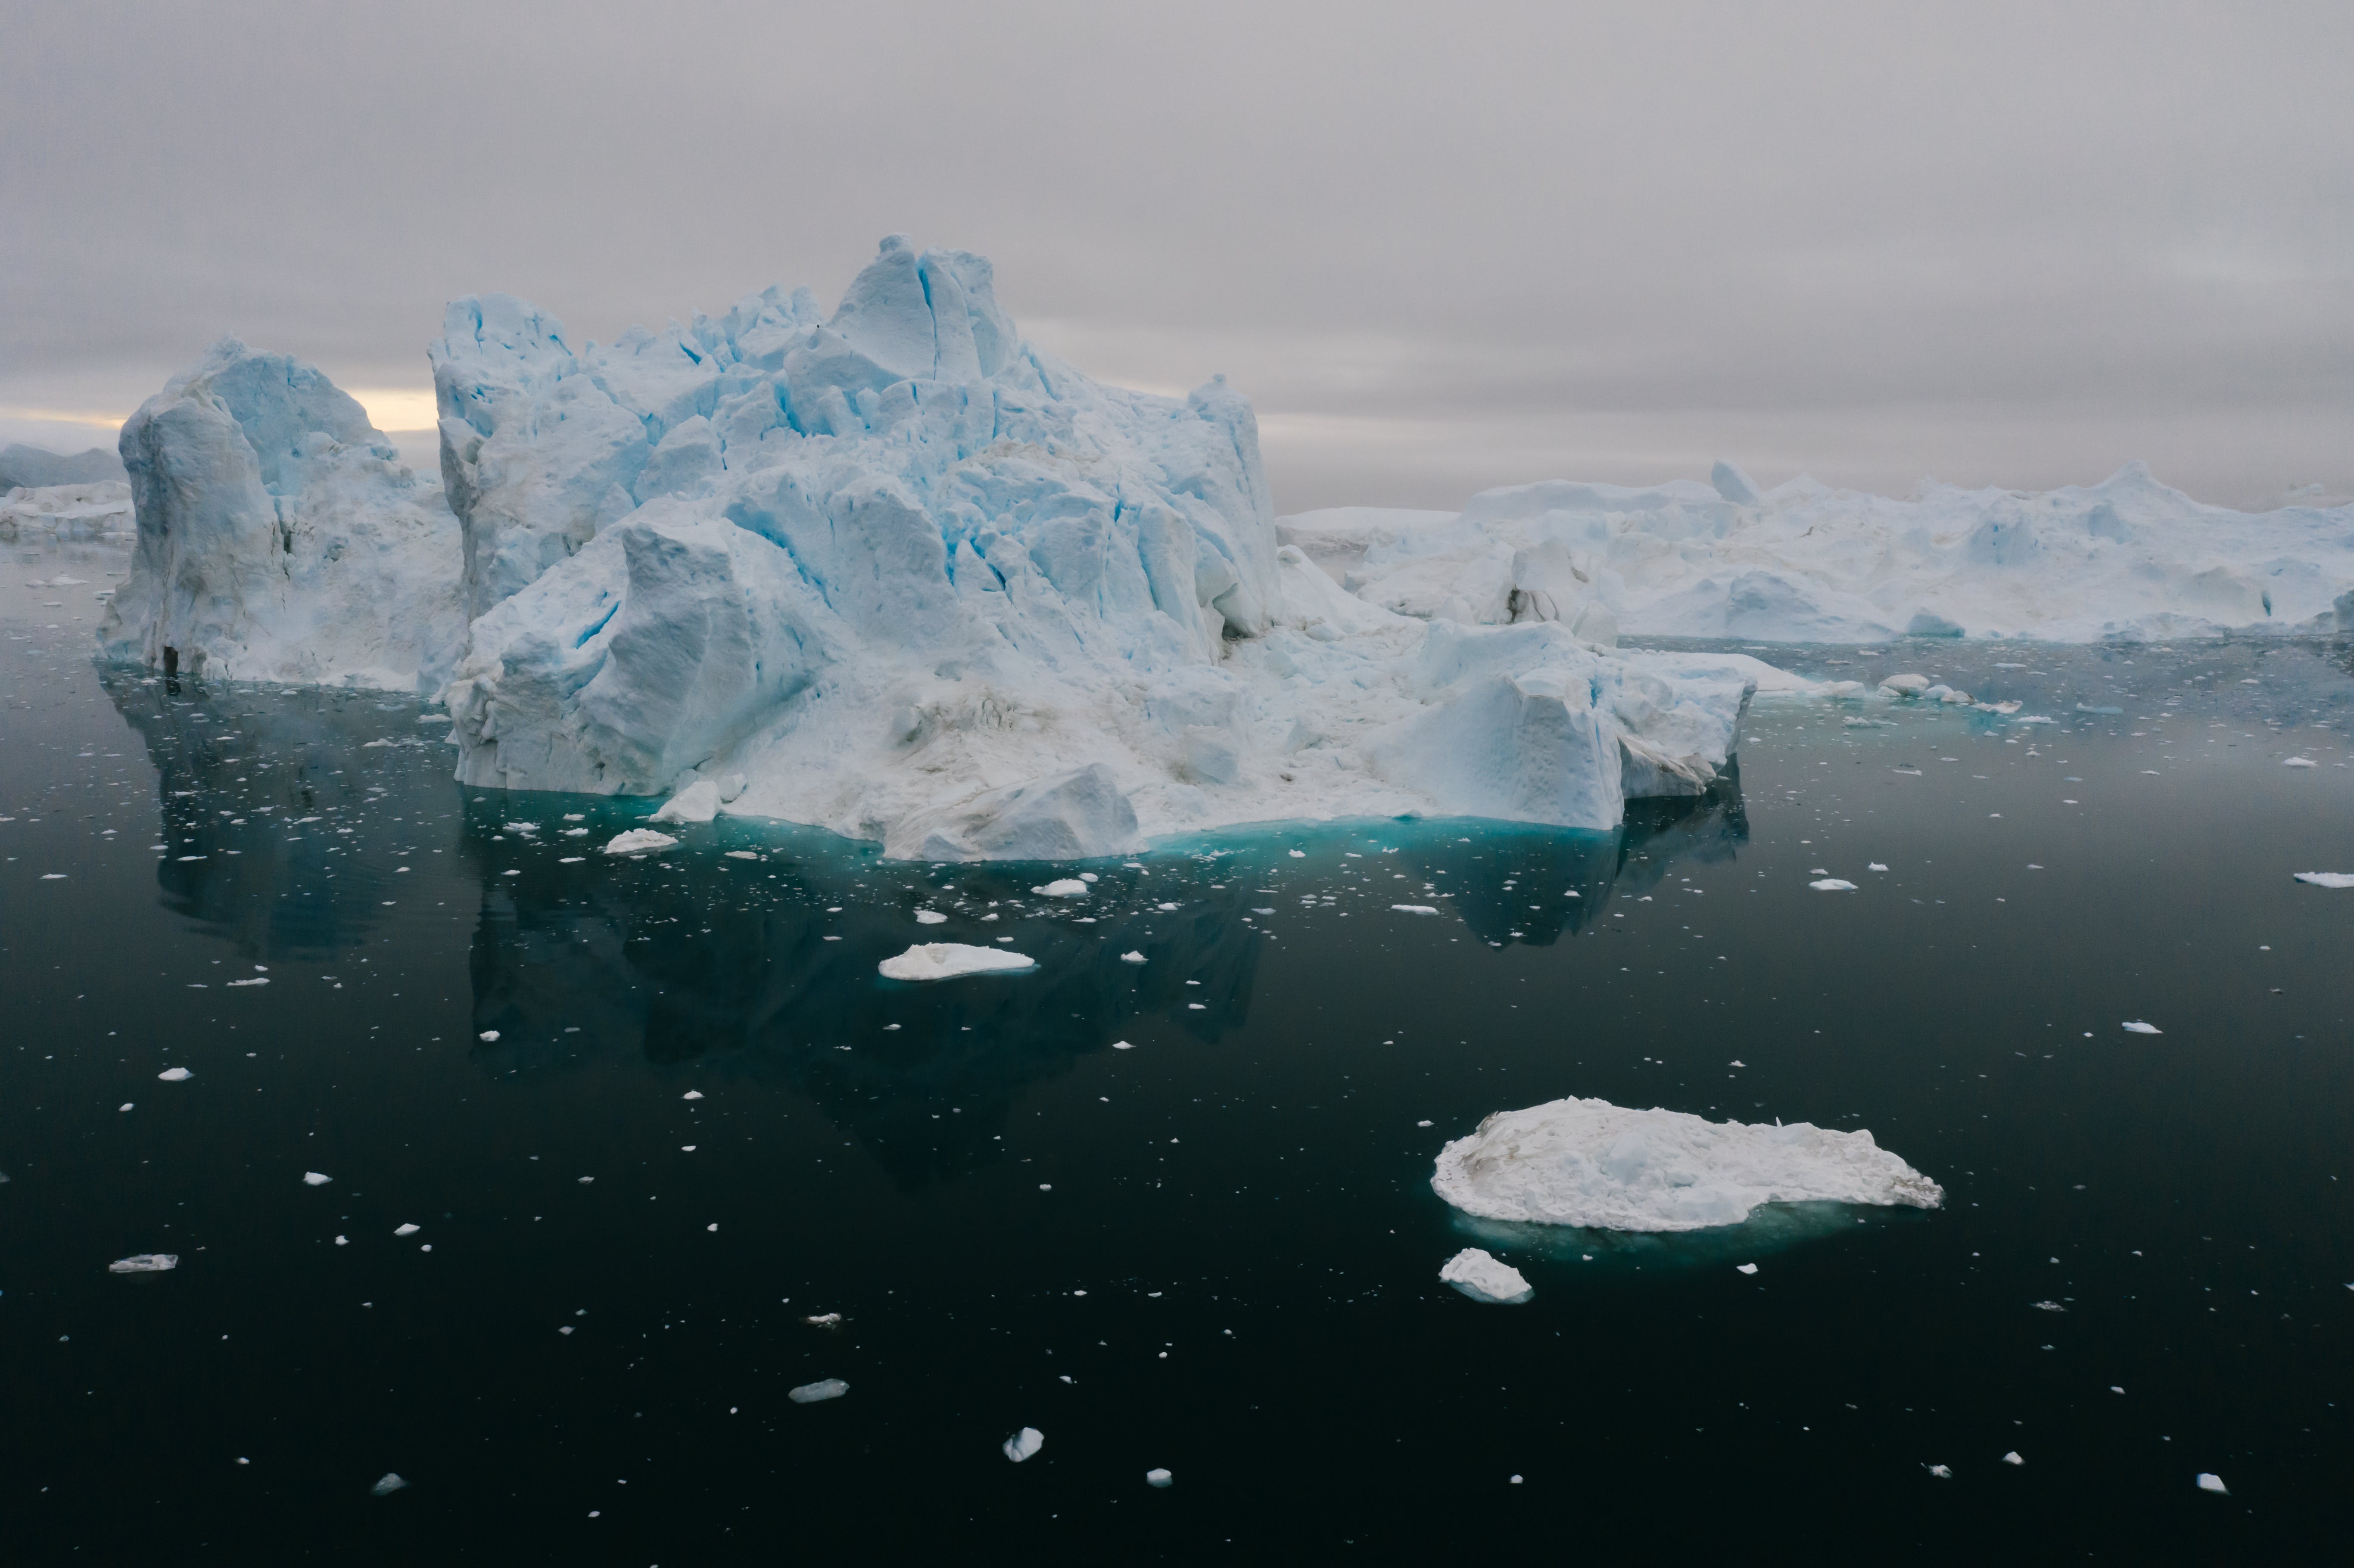 Gratis Fotos de stock gratuitas de agua, antártico, ártico Foto de stock